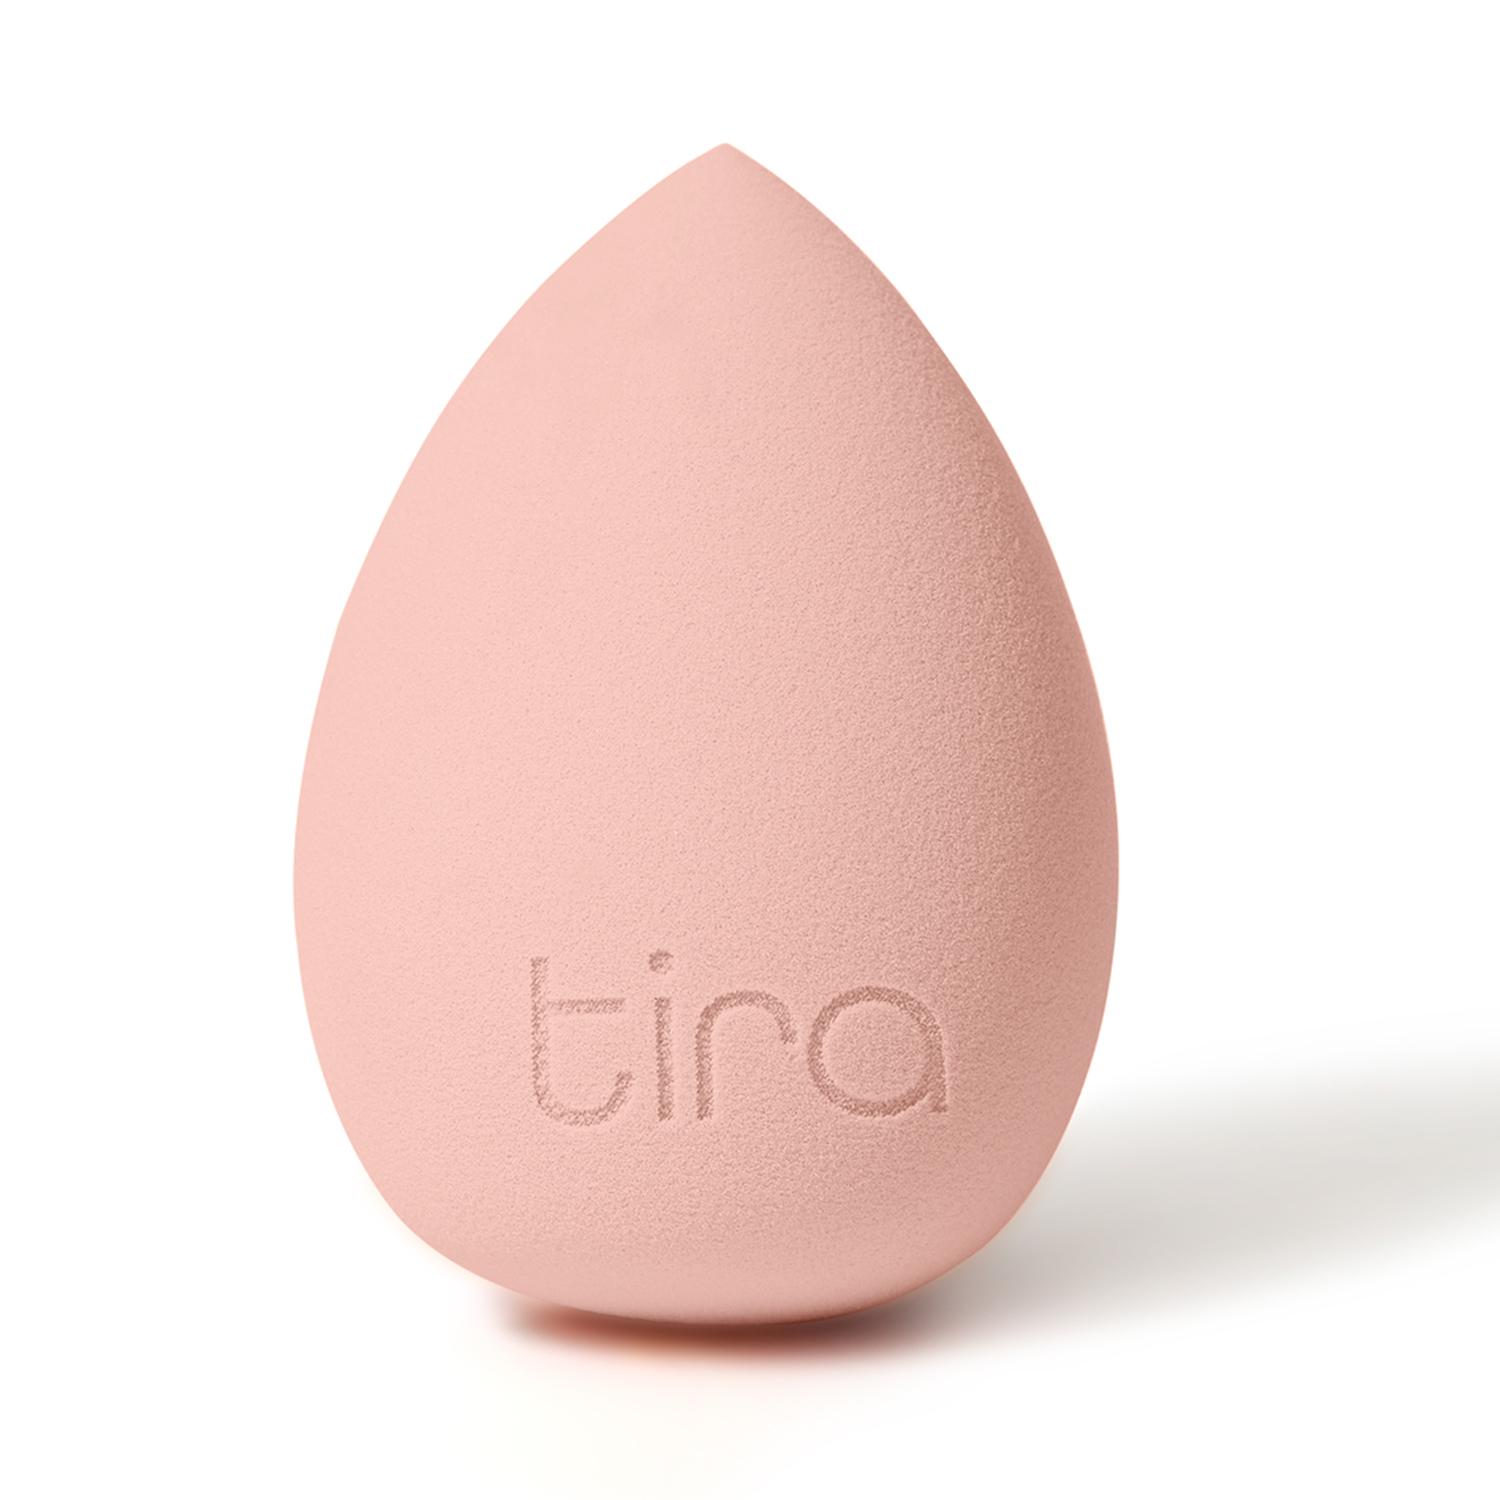 Tira | Tira Beauty Sponge Dew Drop